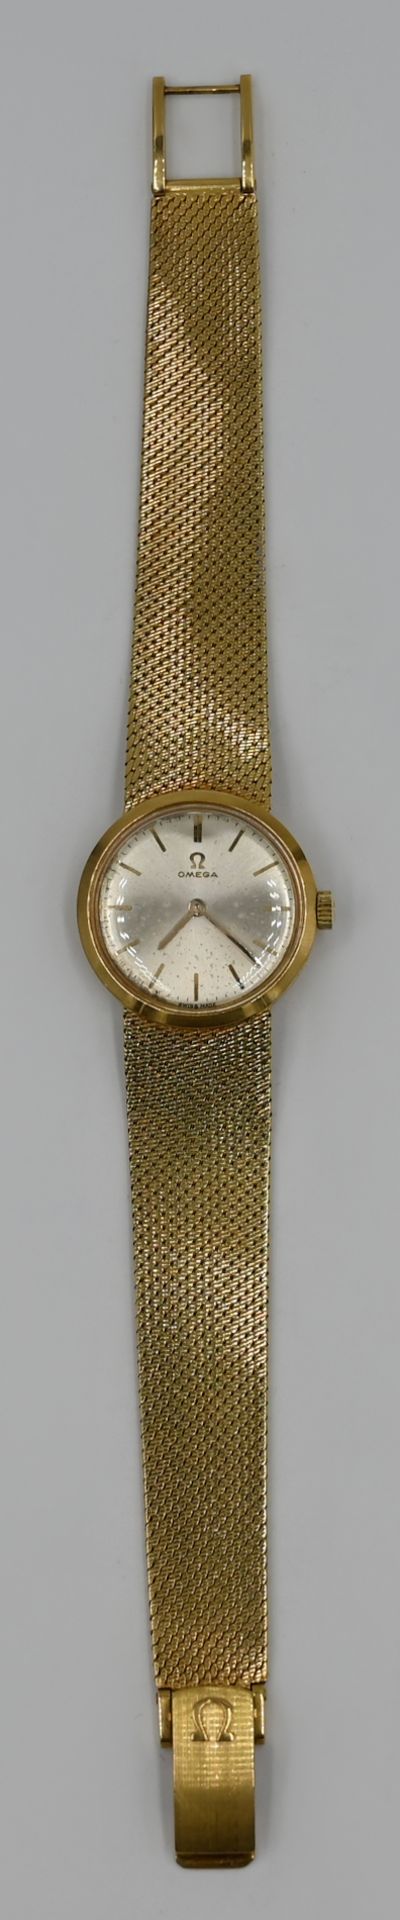 1 Damenarmbanduhr OMEGA, GG 18ct., in Originalschatulle, fleckiges Ziffernblatt, Handaufzug, Uhr läu - Bild 2 aus 3